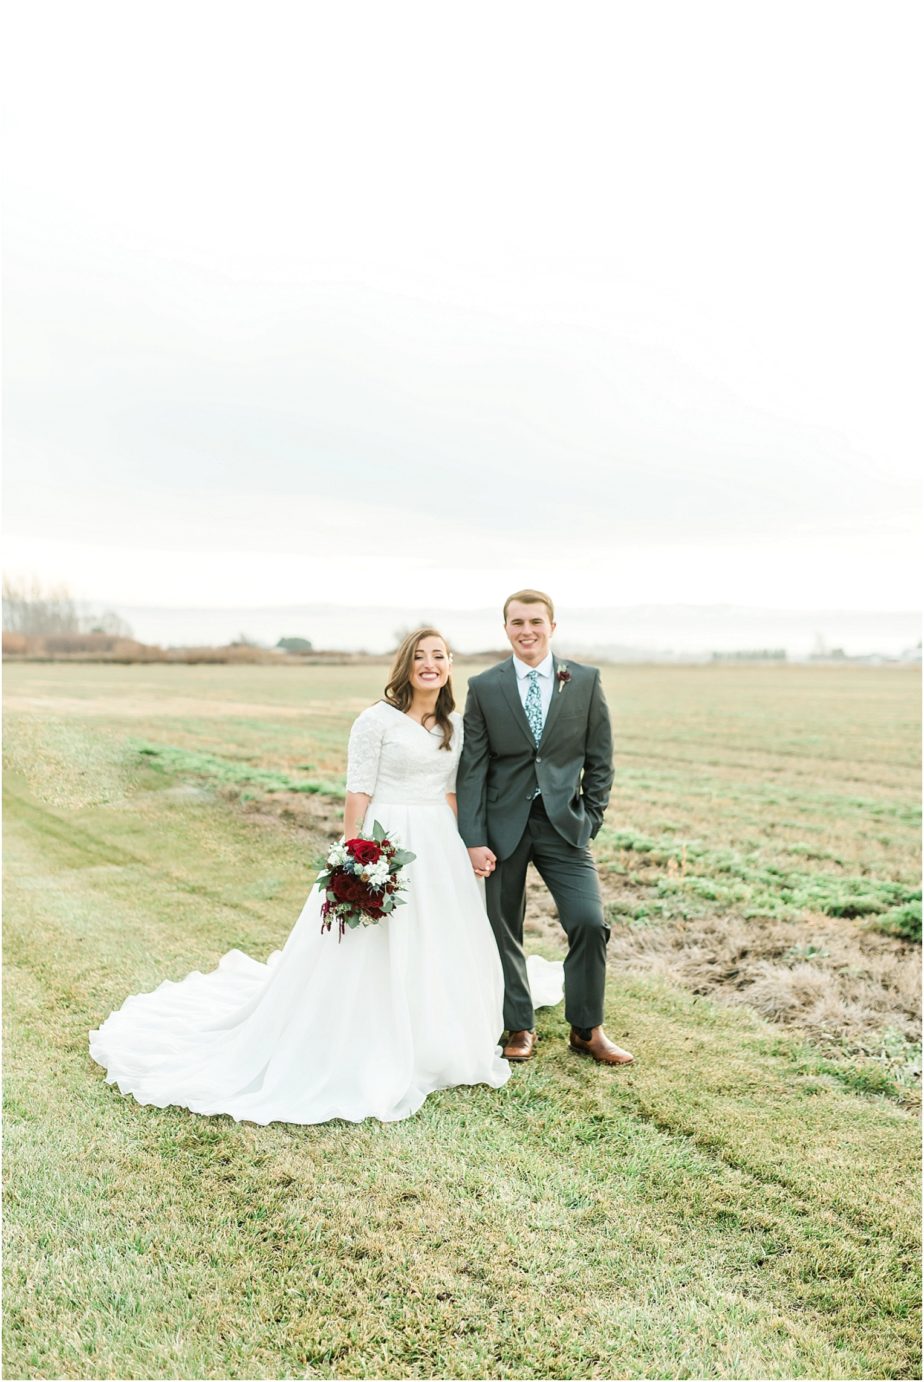 Ellensburg backyard wedding- bride and groom in a field